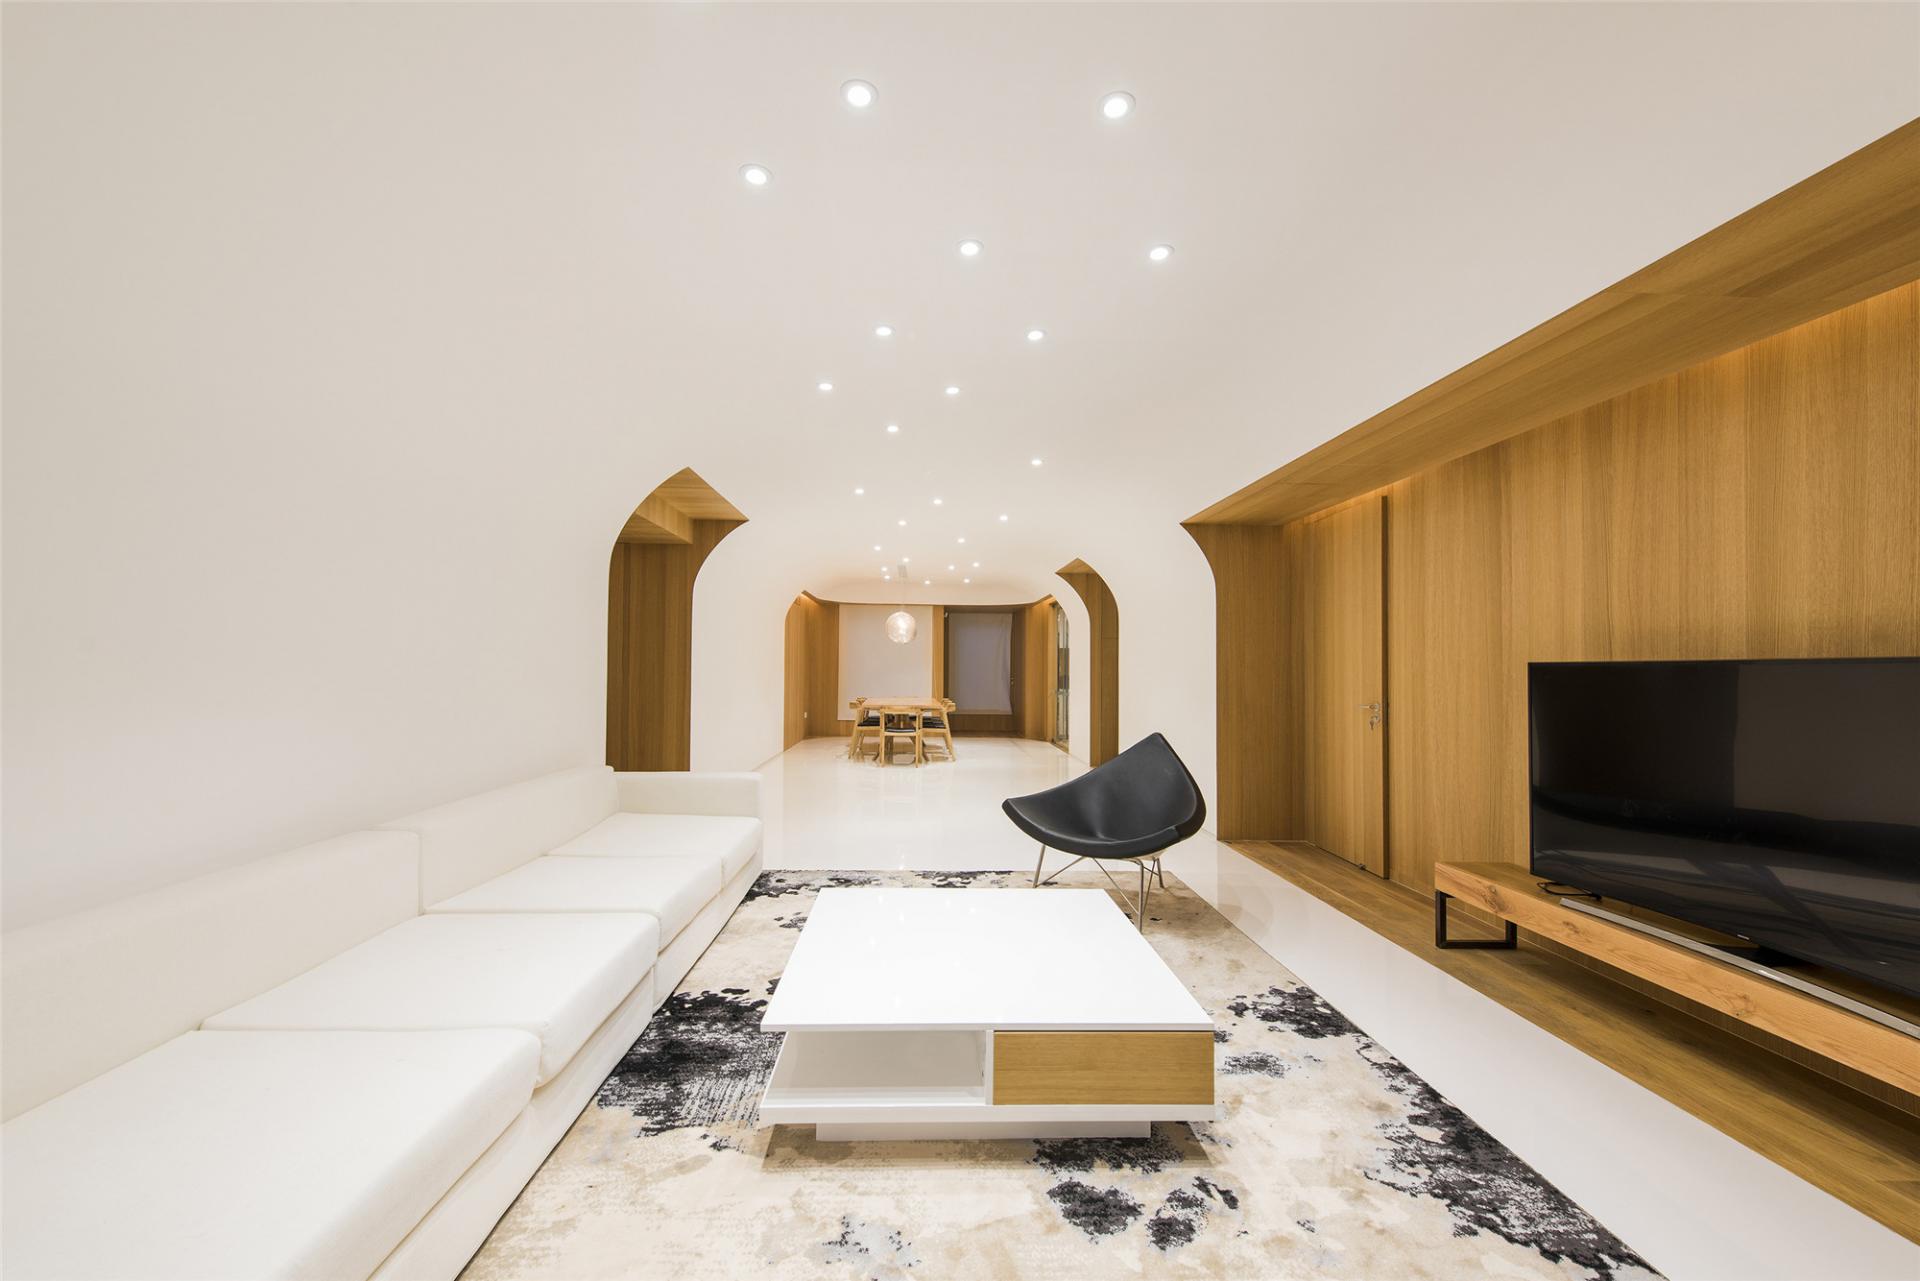 Living room interior decor ideas